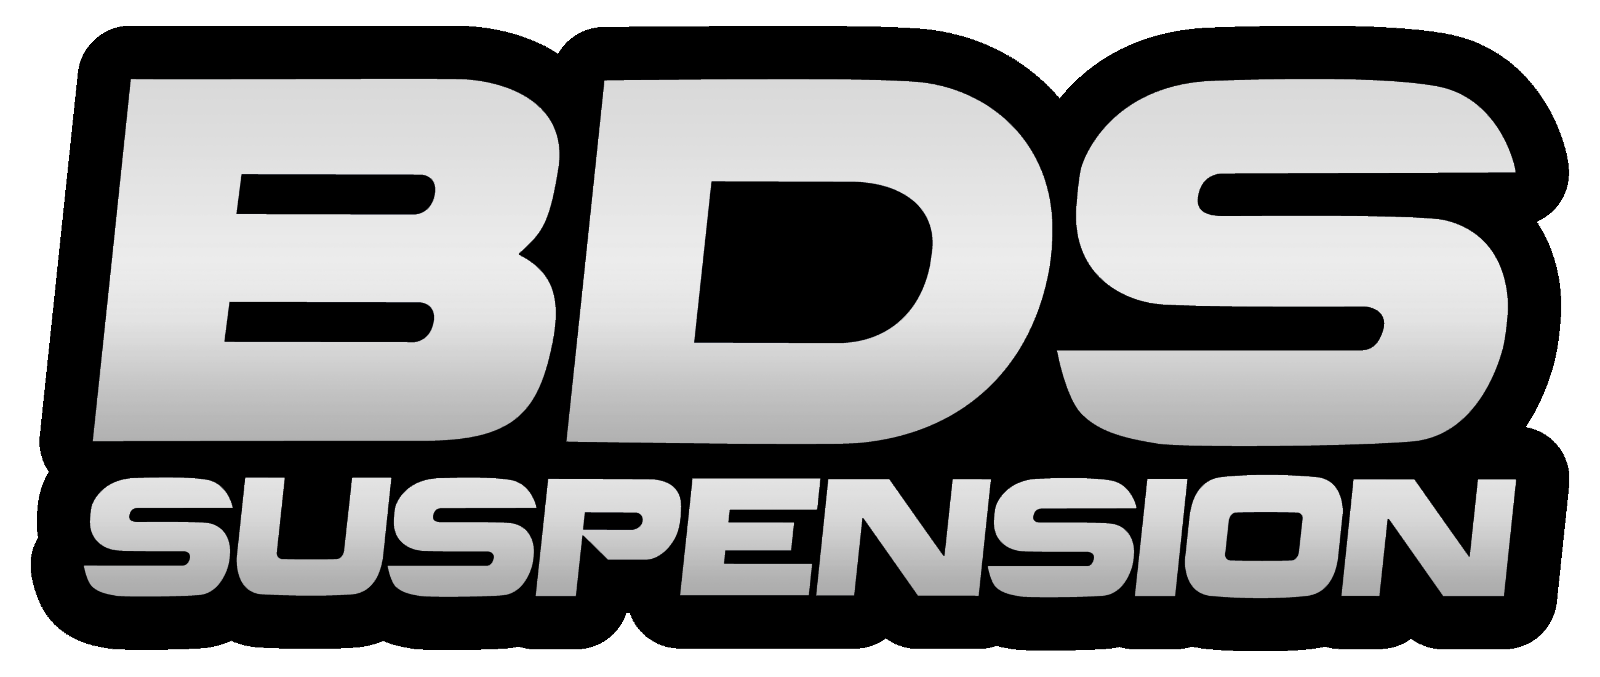 BDS BDS197FS 6.5 Inch Lift Kit - Chevy Silverado or GMC Sierra 2500HD/3500 (11-19) 2/4WD